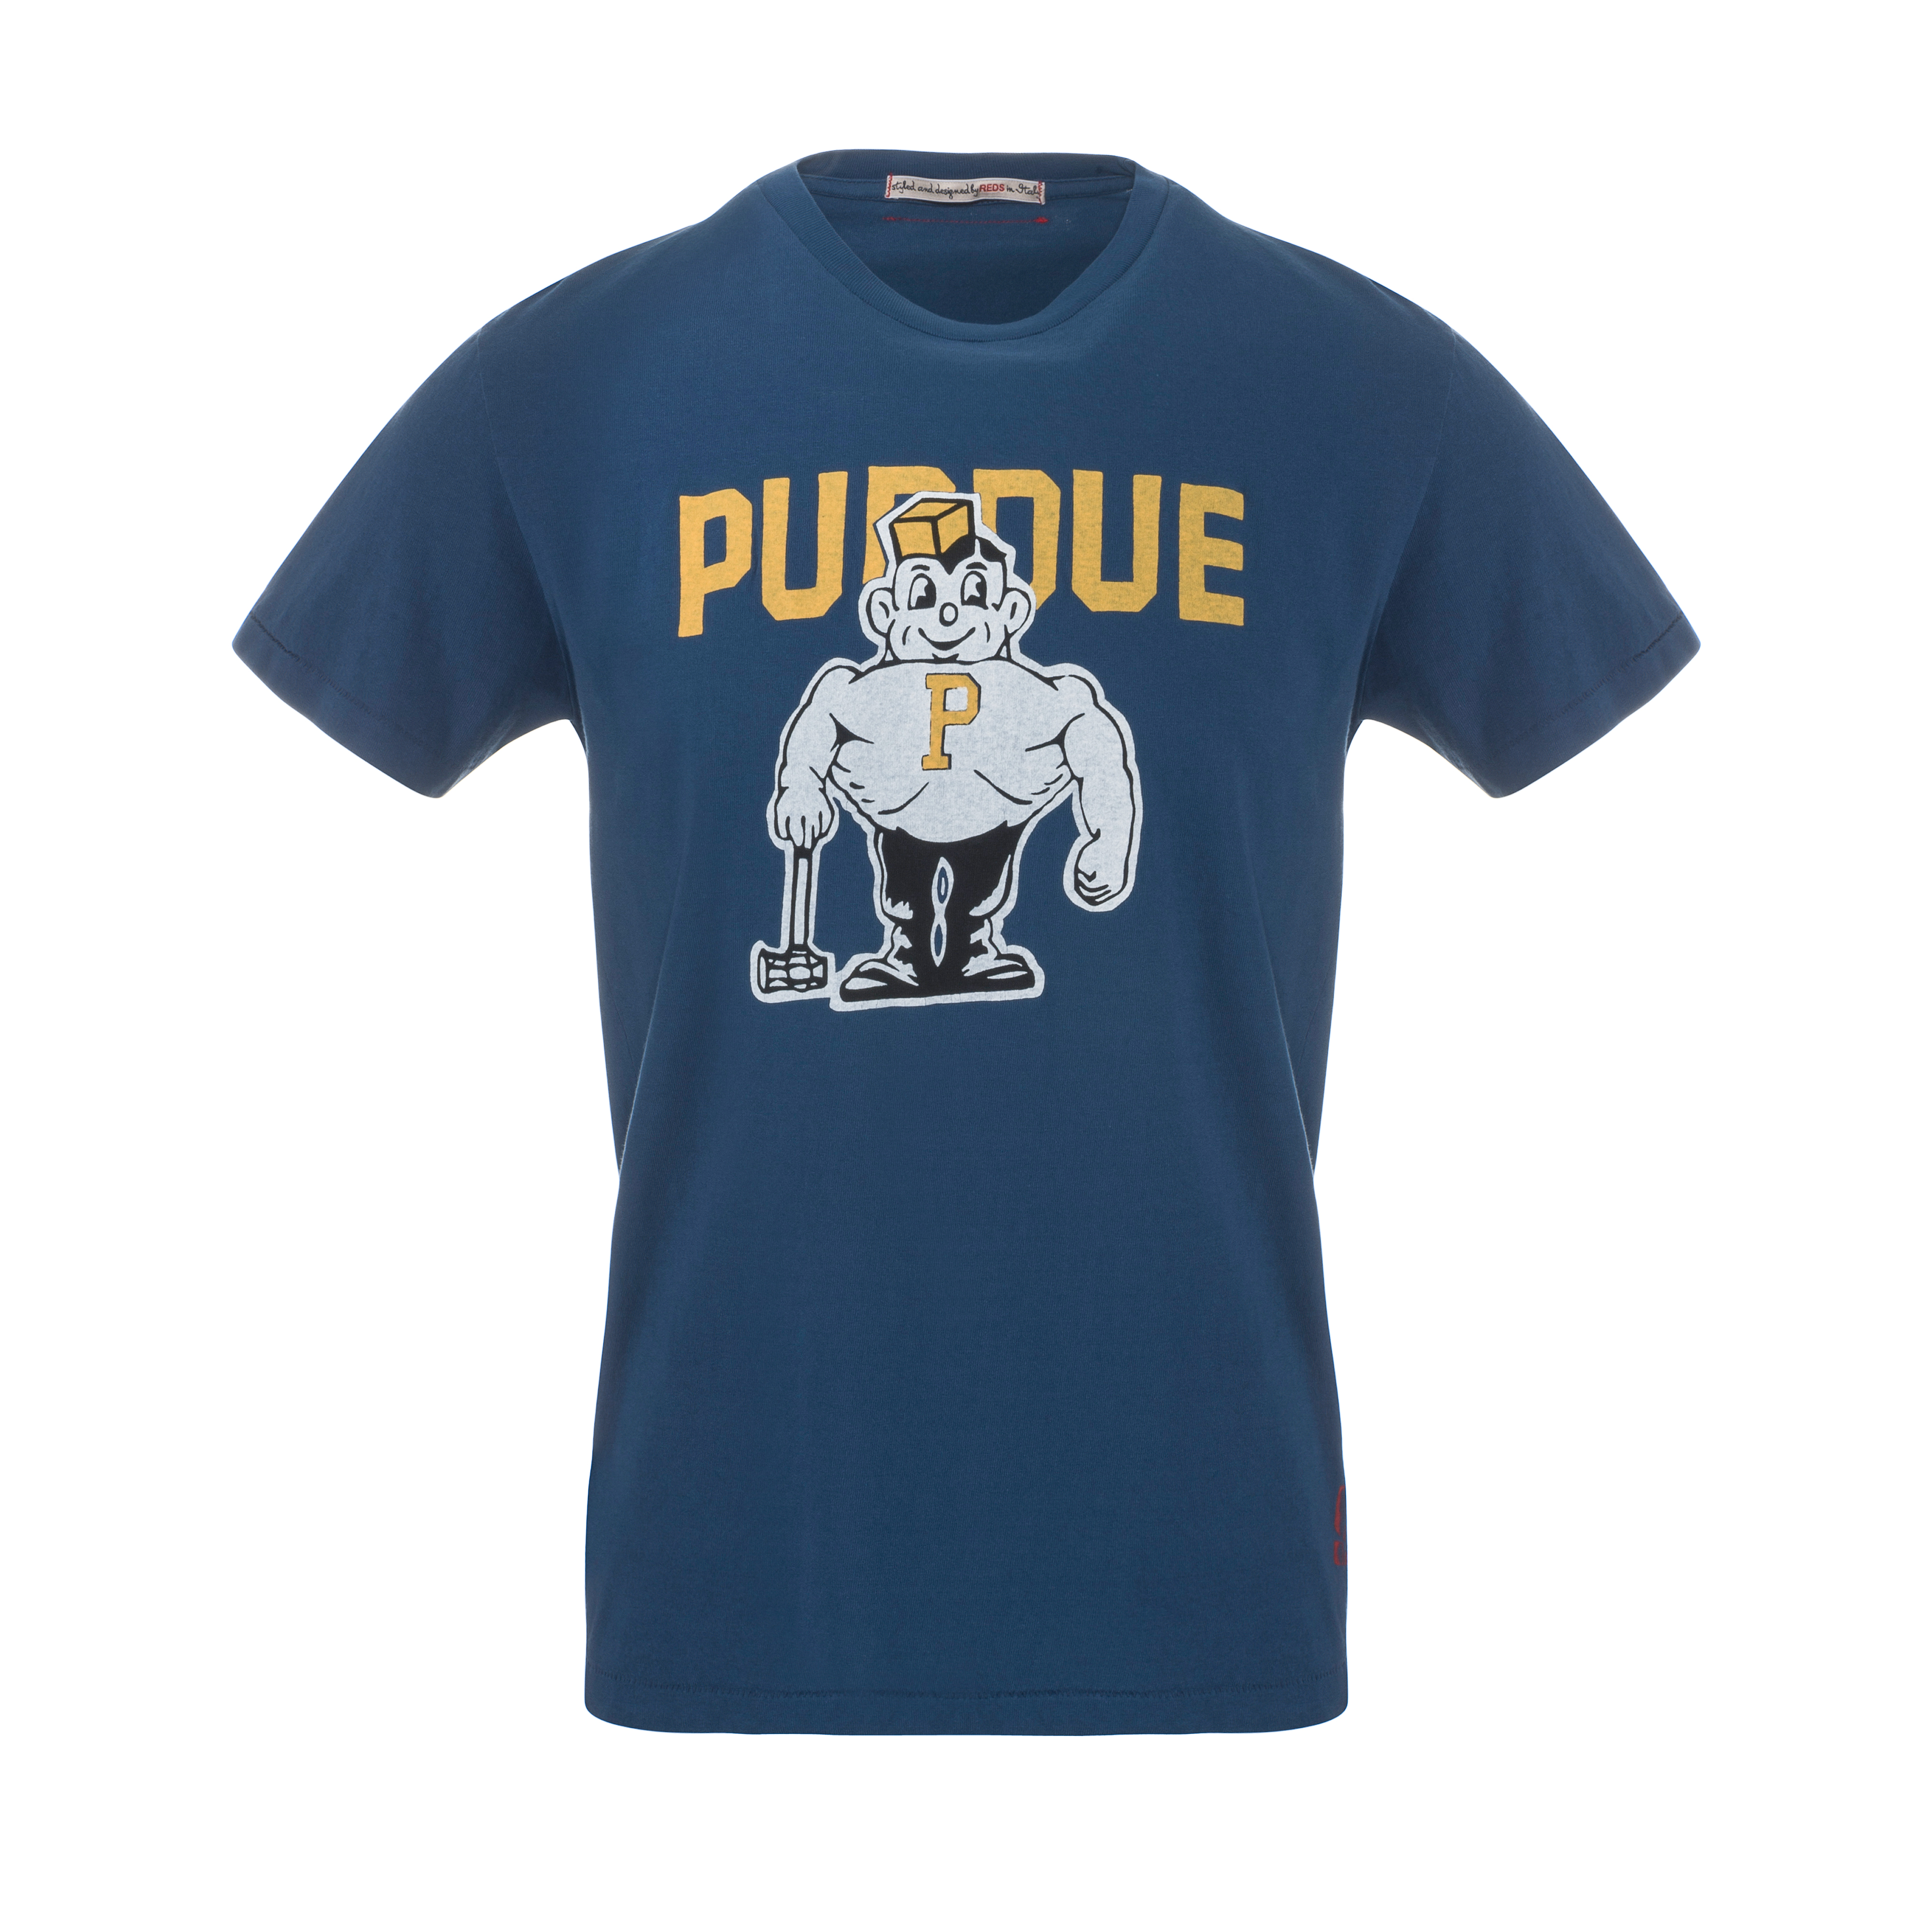 Royal Purdue T-Shirt Navy